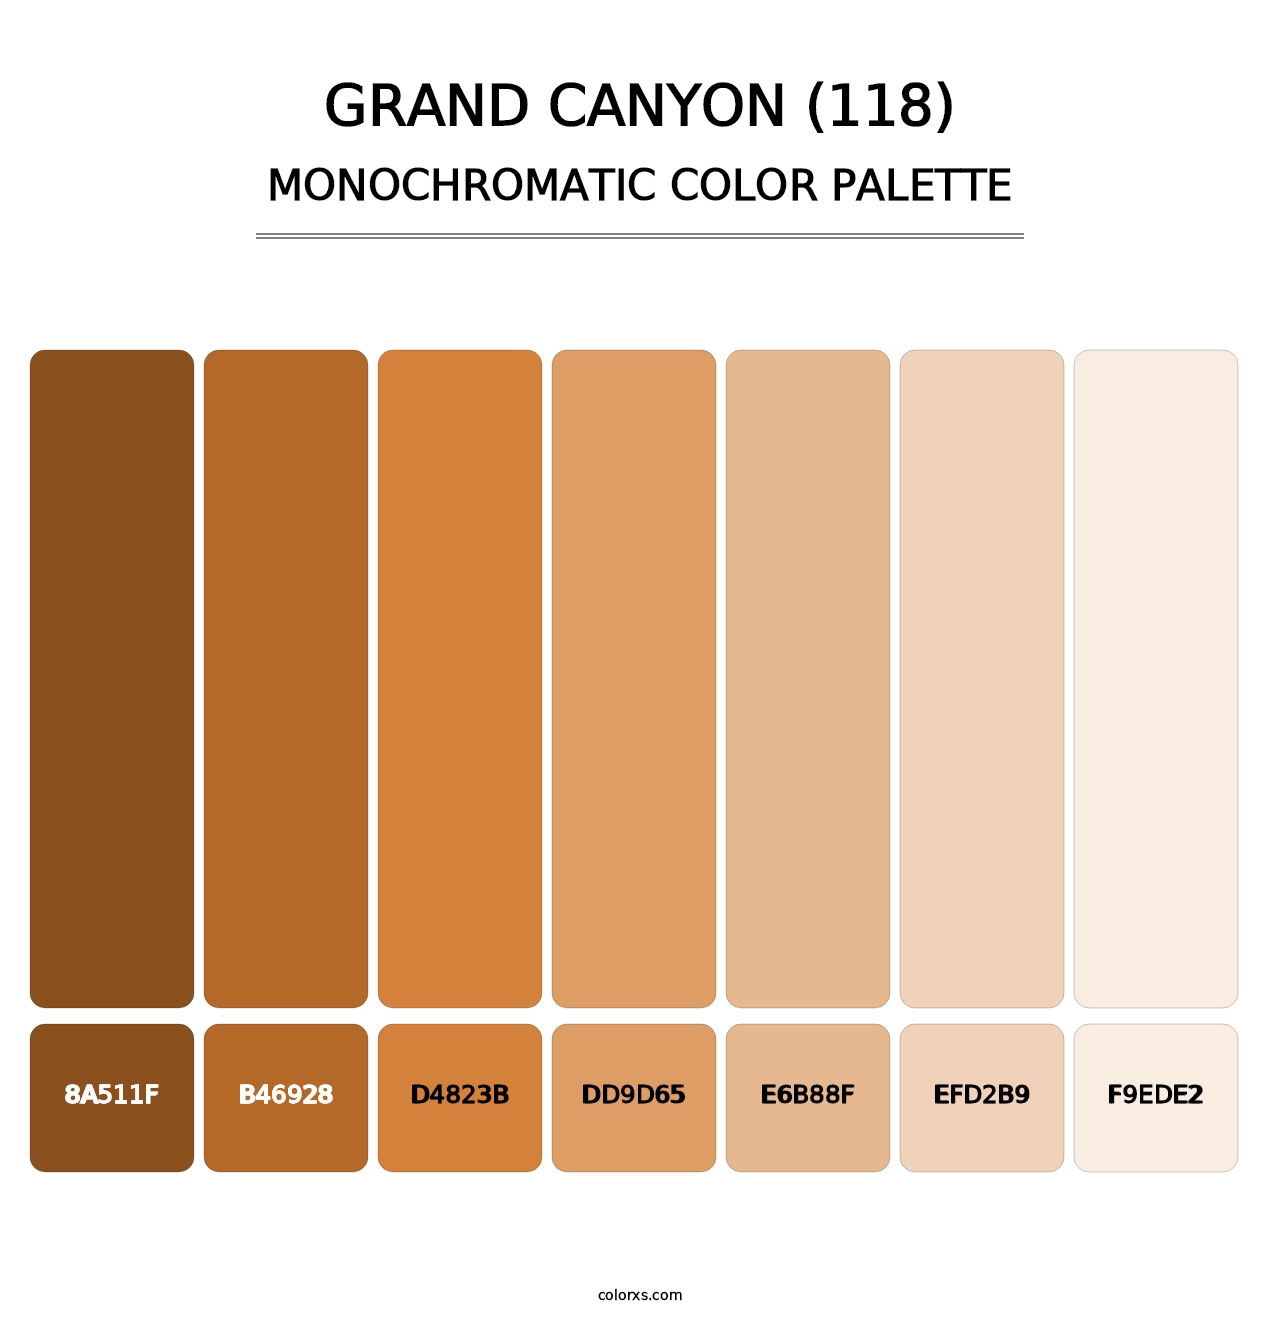 Grand Canyon (118) - Monochromatic Color Palette